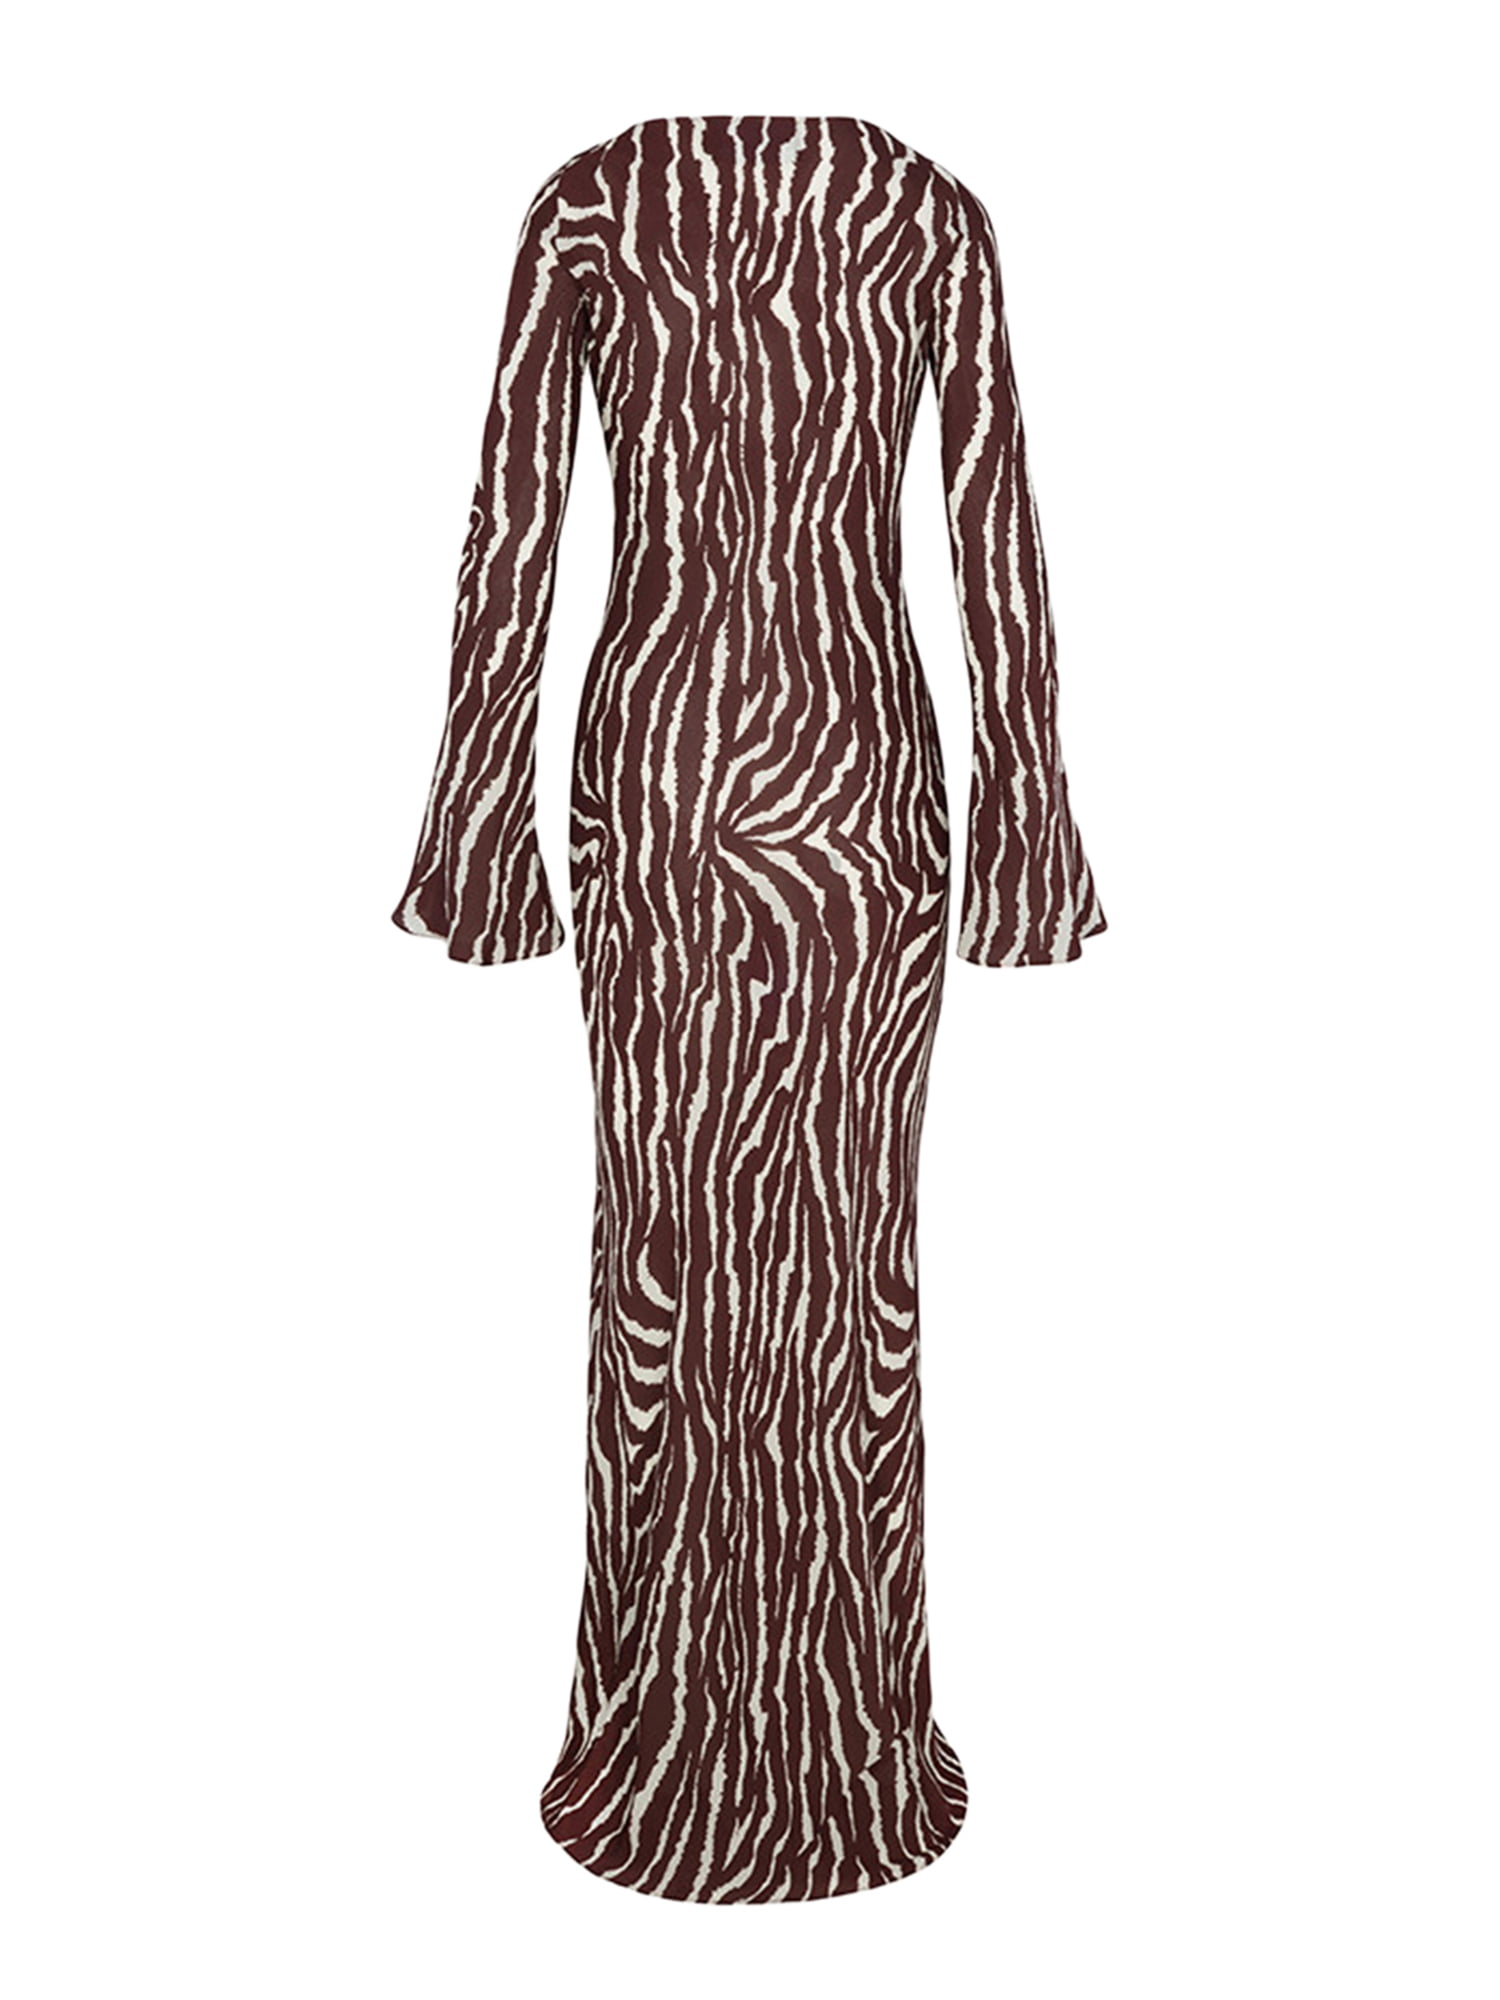 Ladies Long Dress, Zebra Print Long Sleeve Flared Cuff Party Dress